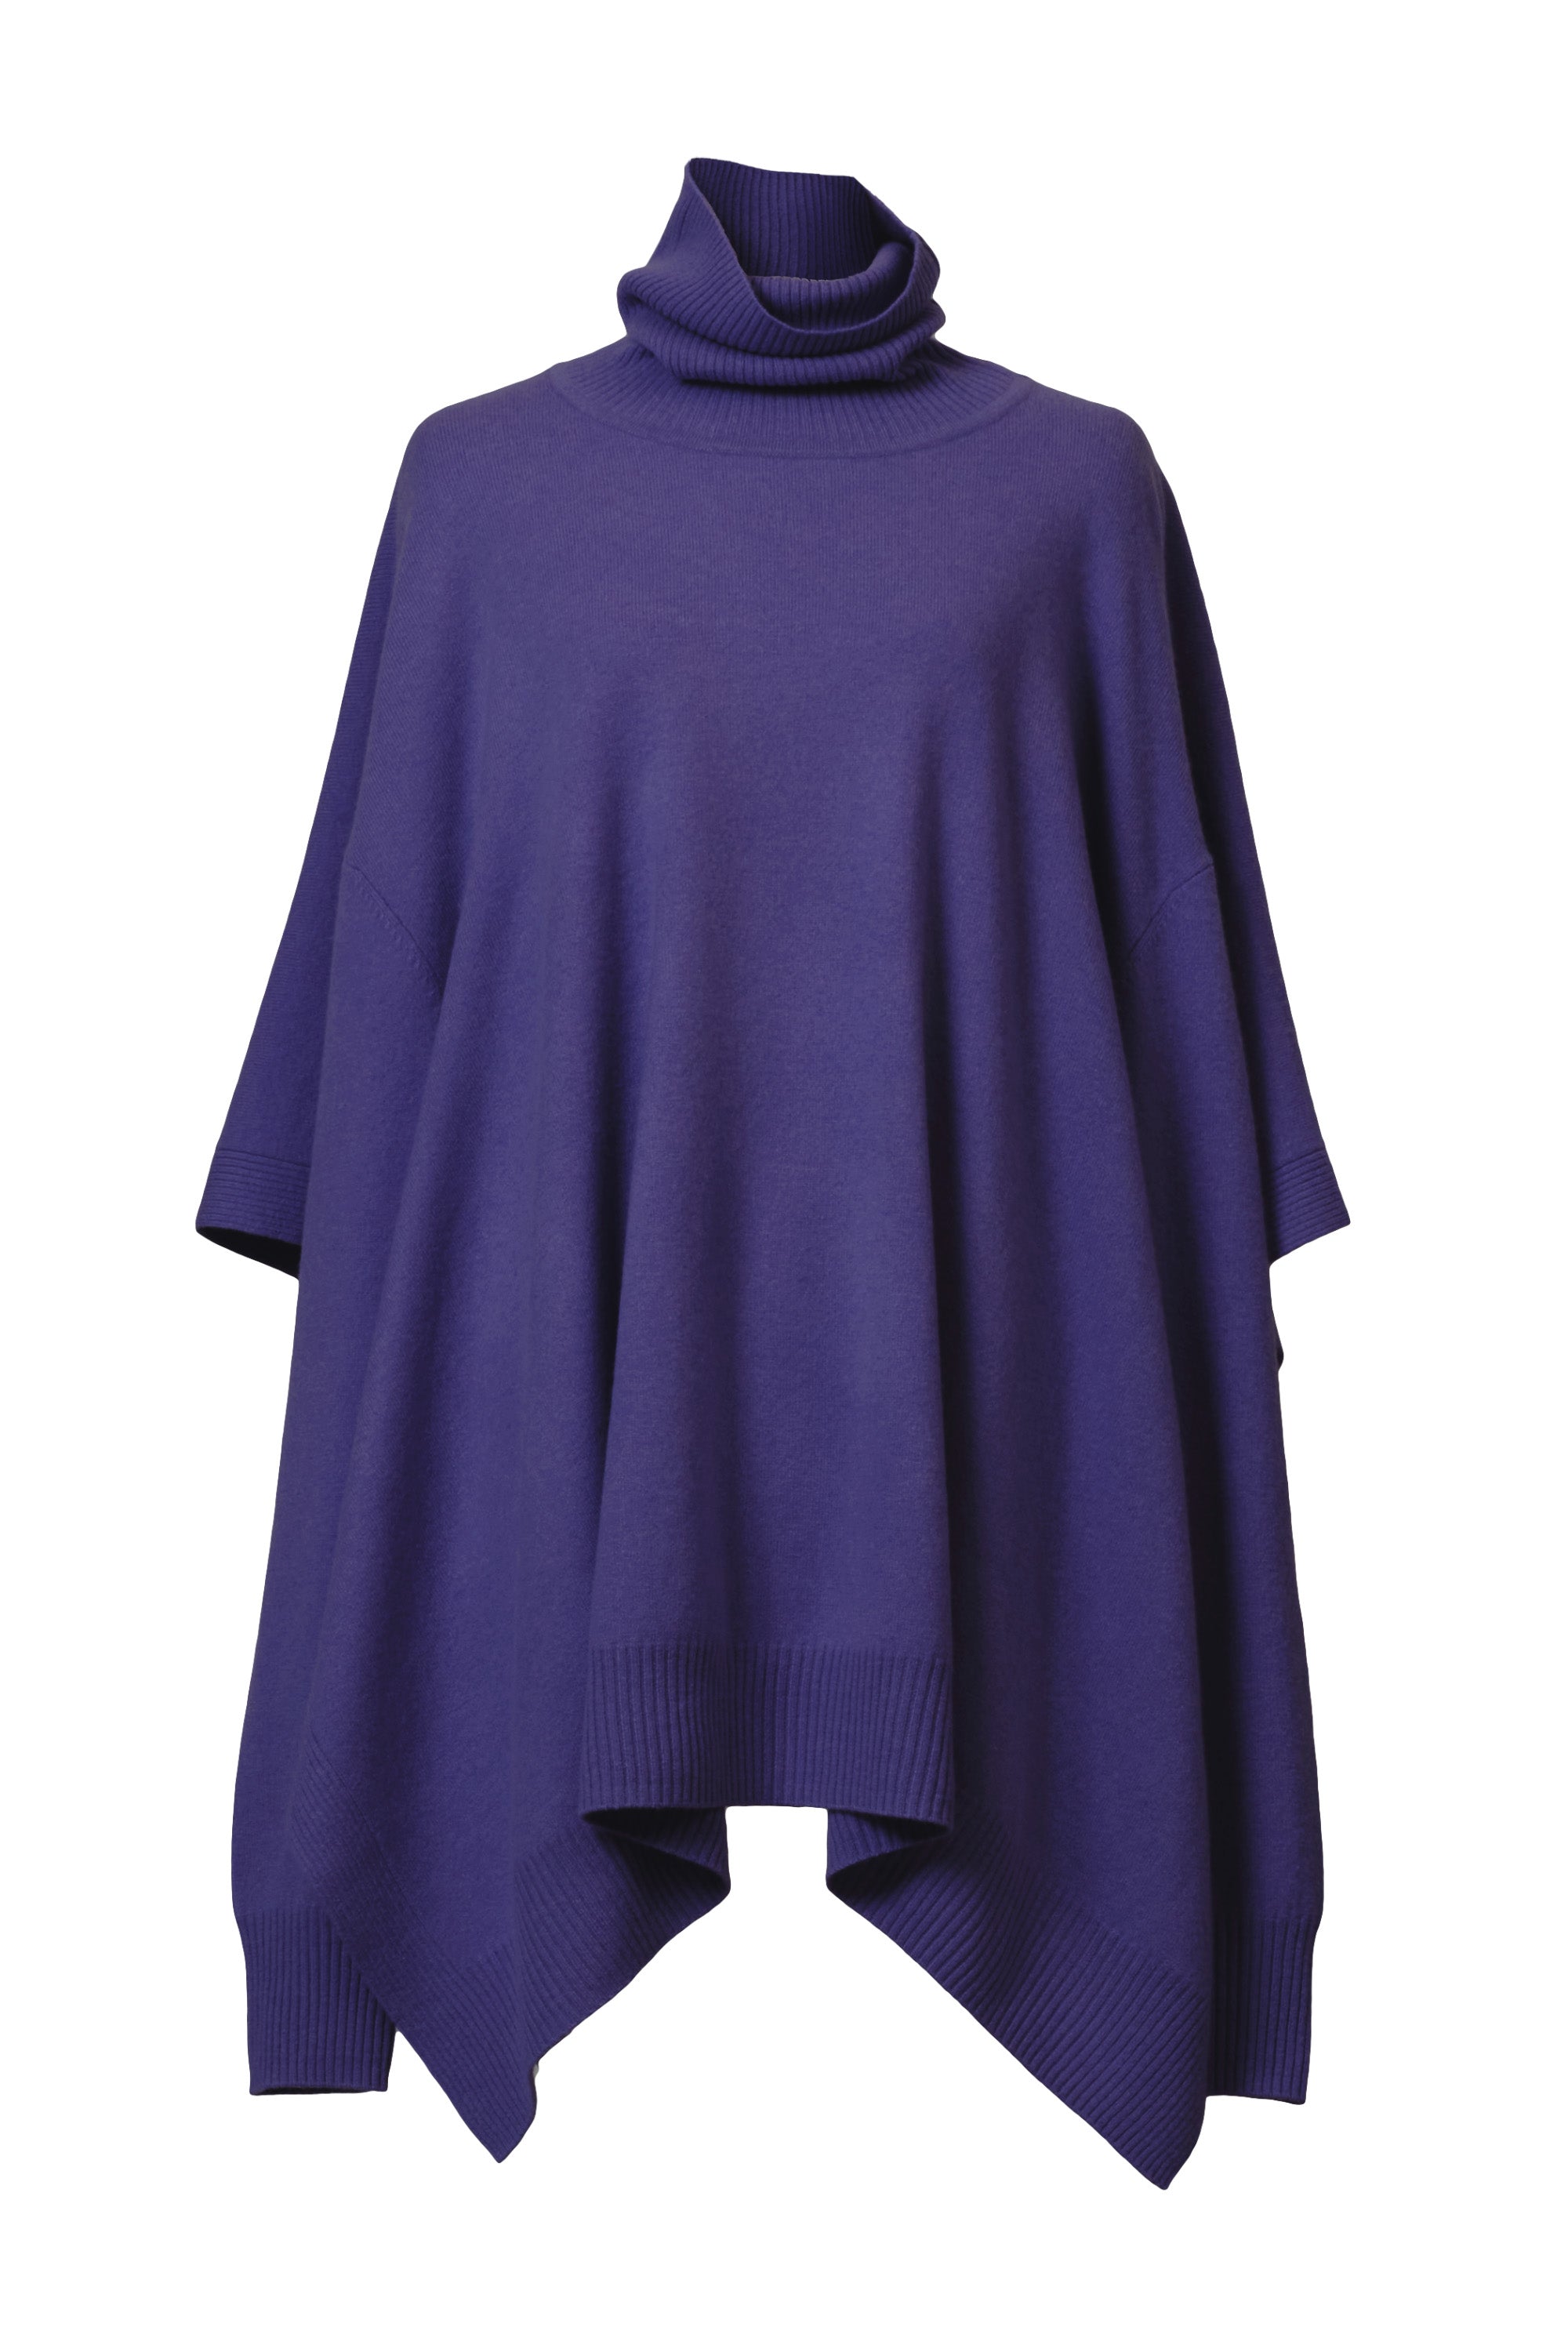 Cashmere Knit Poncho Top | Orchid – MYLAN ONLINE SHOP